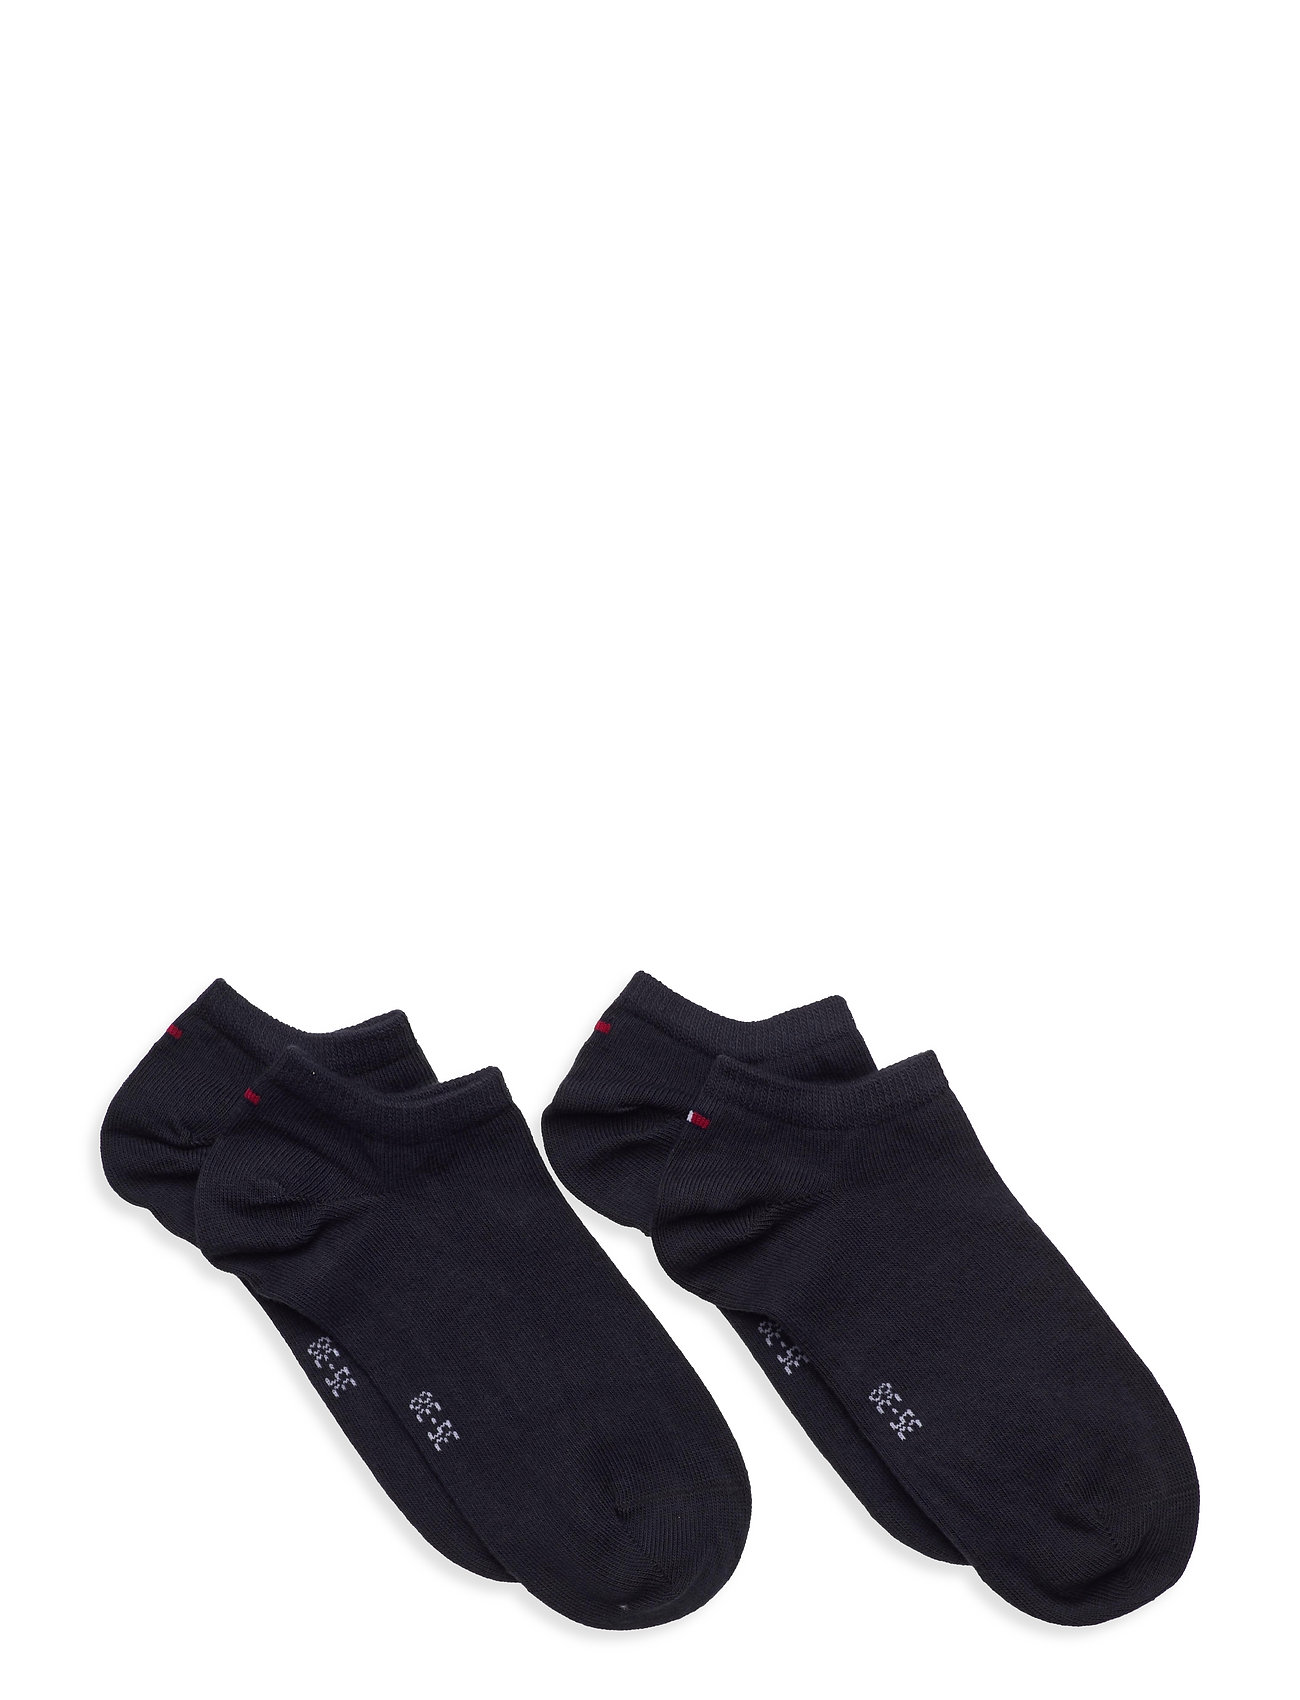 tommy hilfiger children's socks